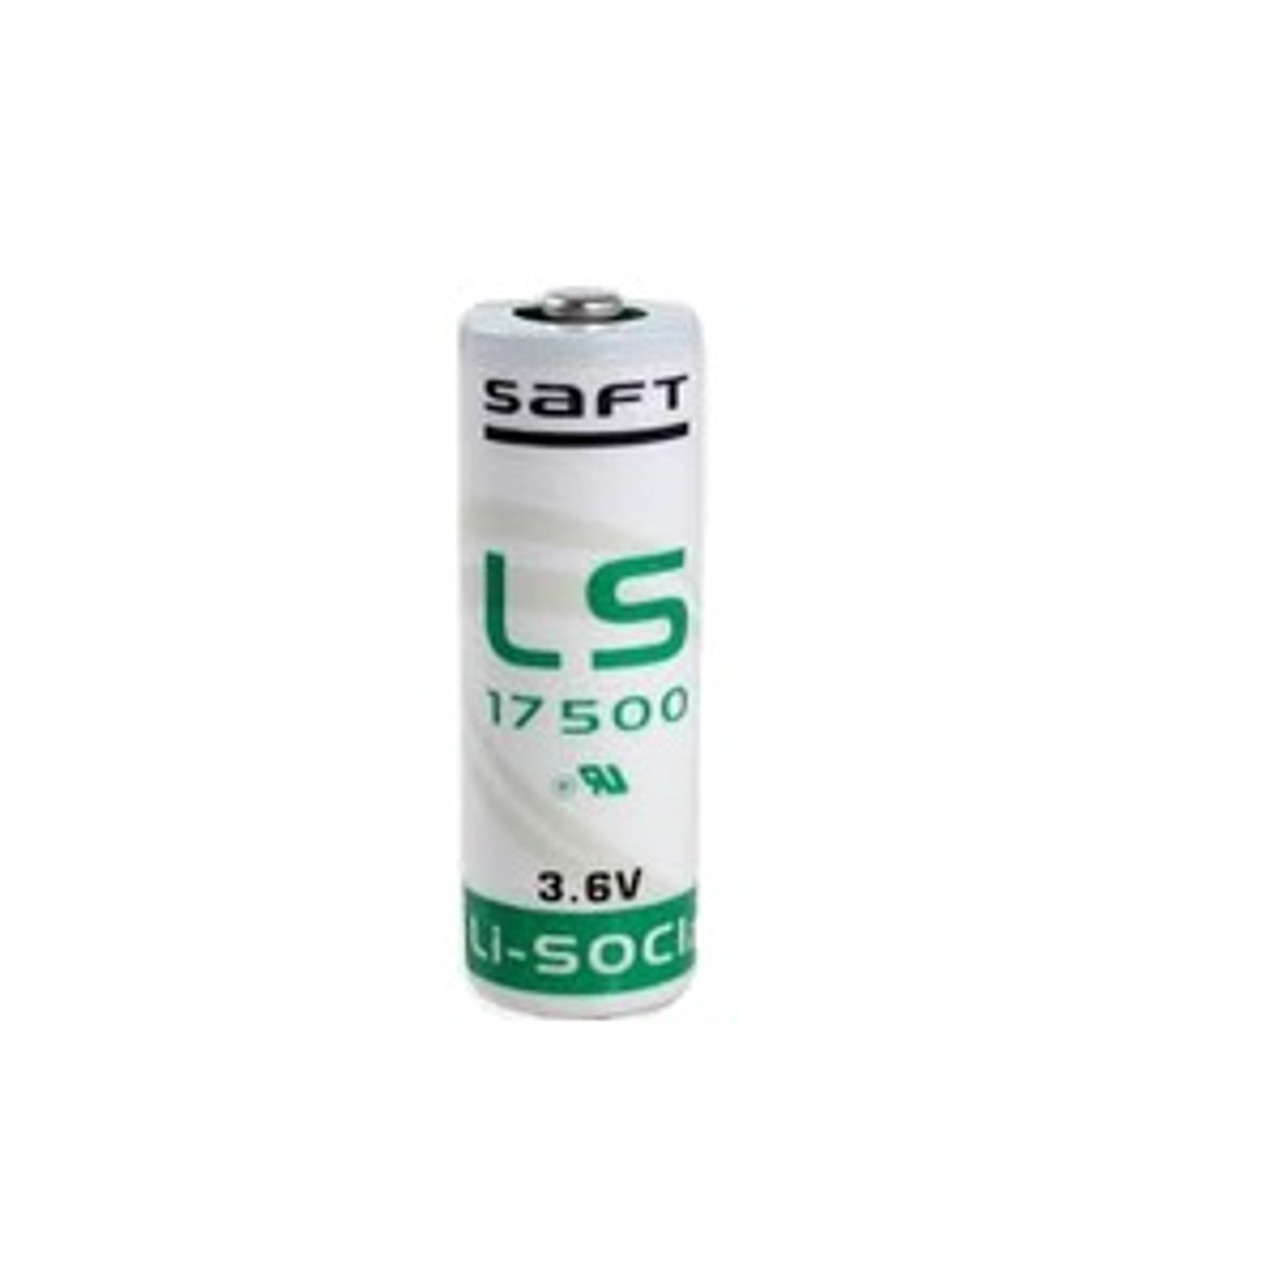 Saft LS17500 - 3.6 Volt Primary Lithium A Battery - Saft # 700134